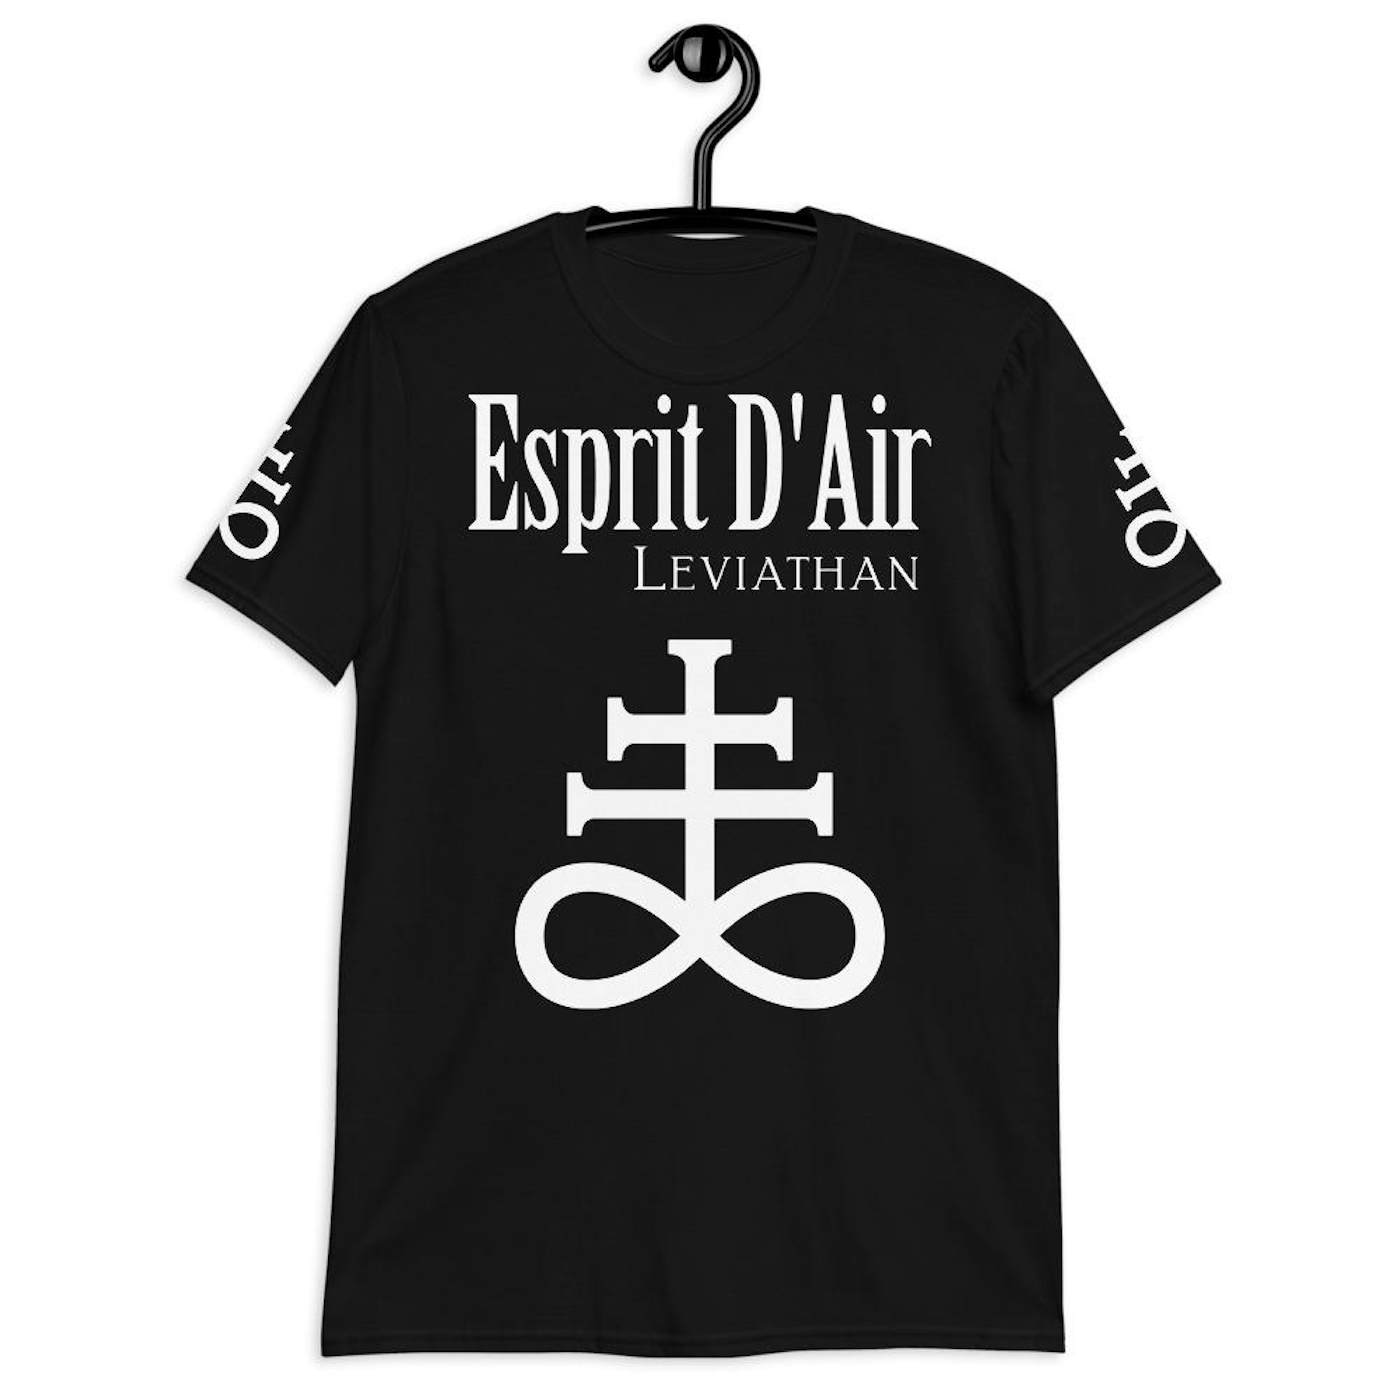 Esprit D'Air Leviathan Cross T-Shirt